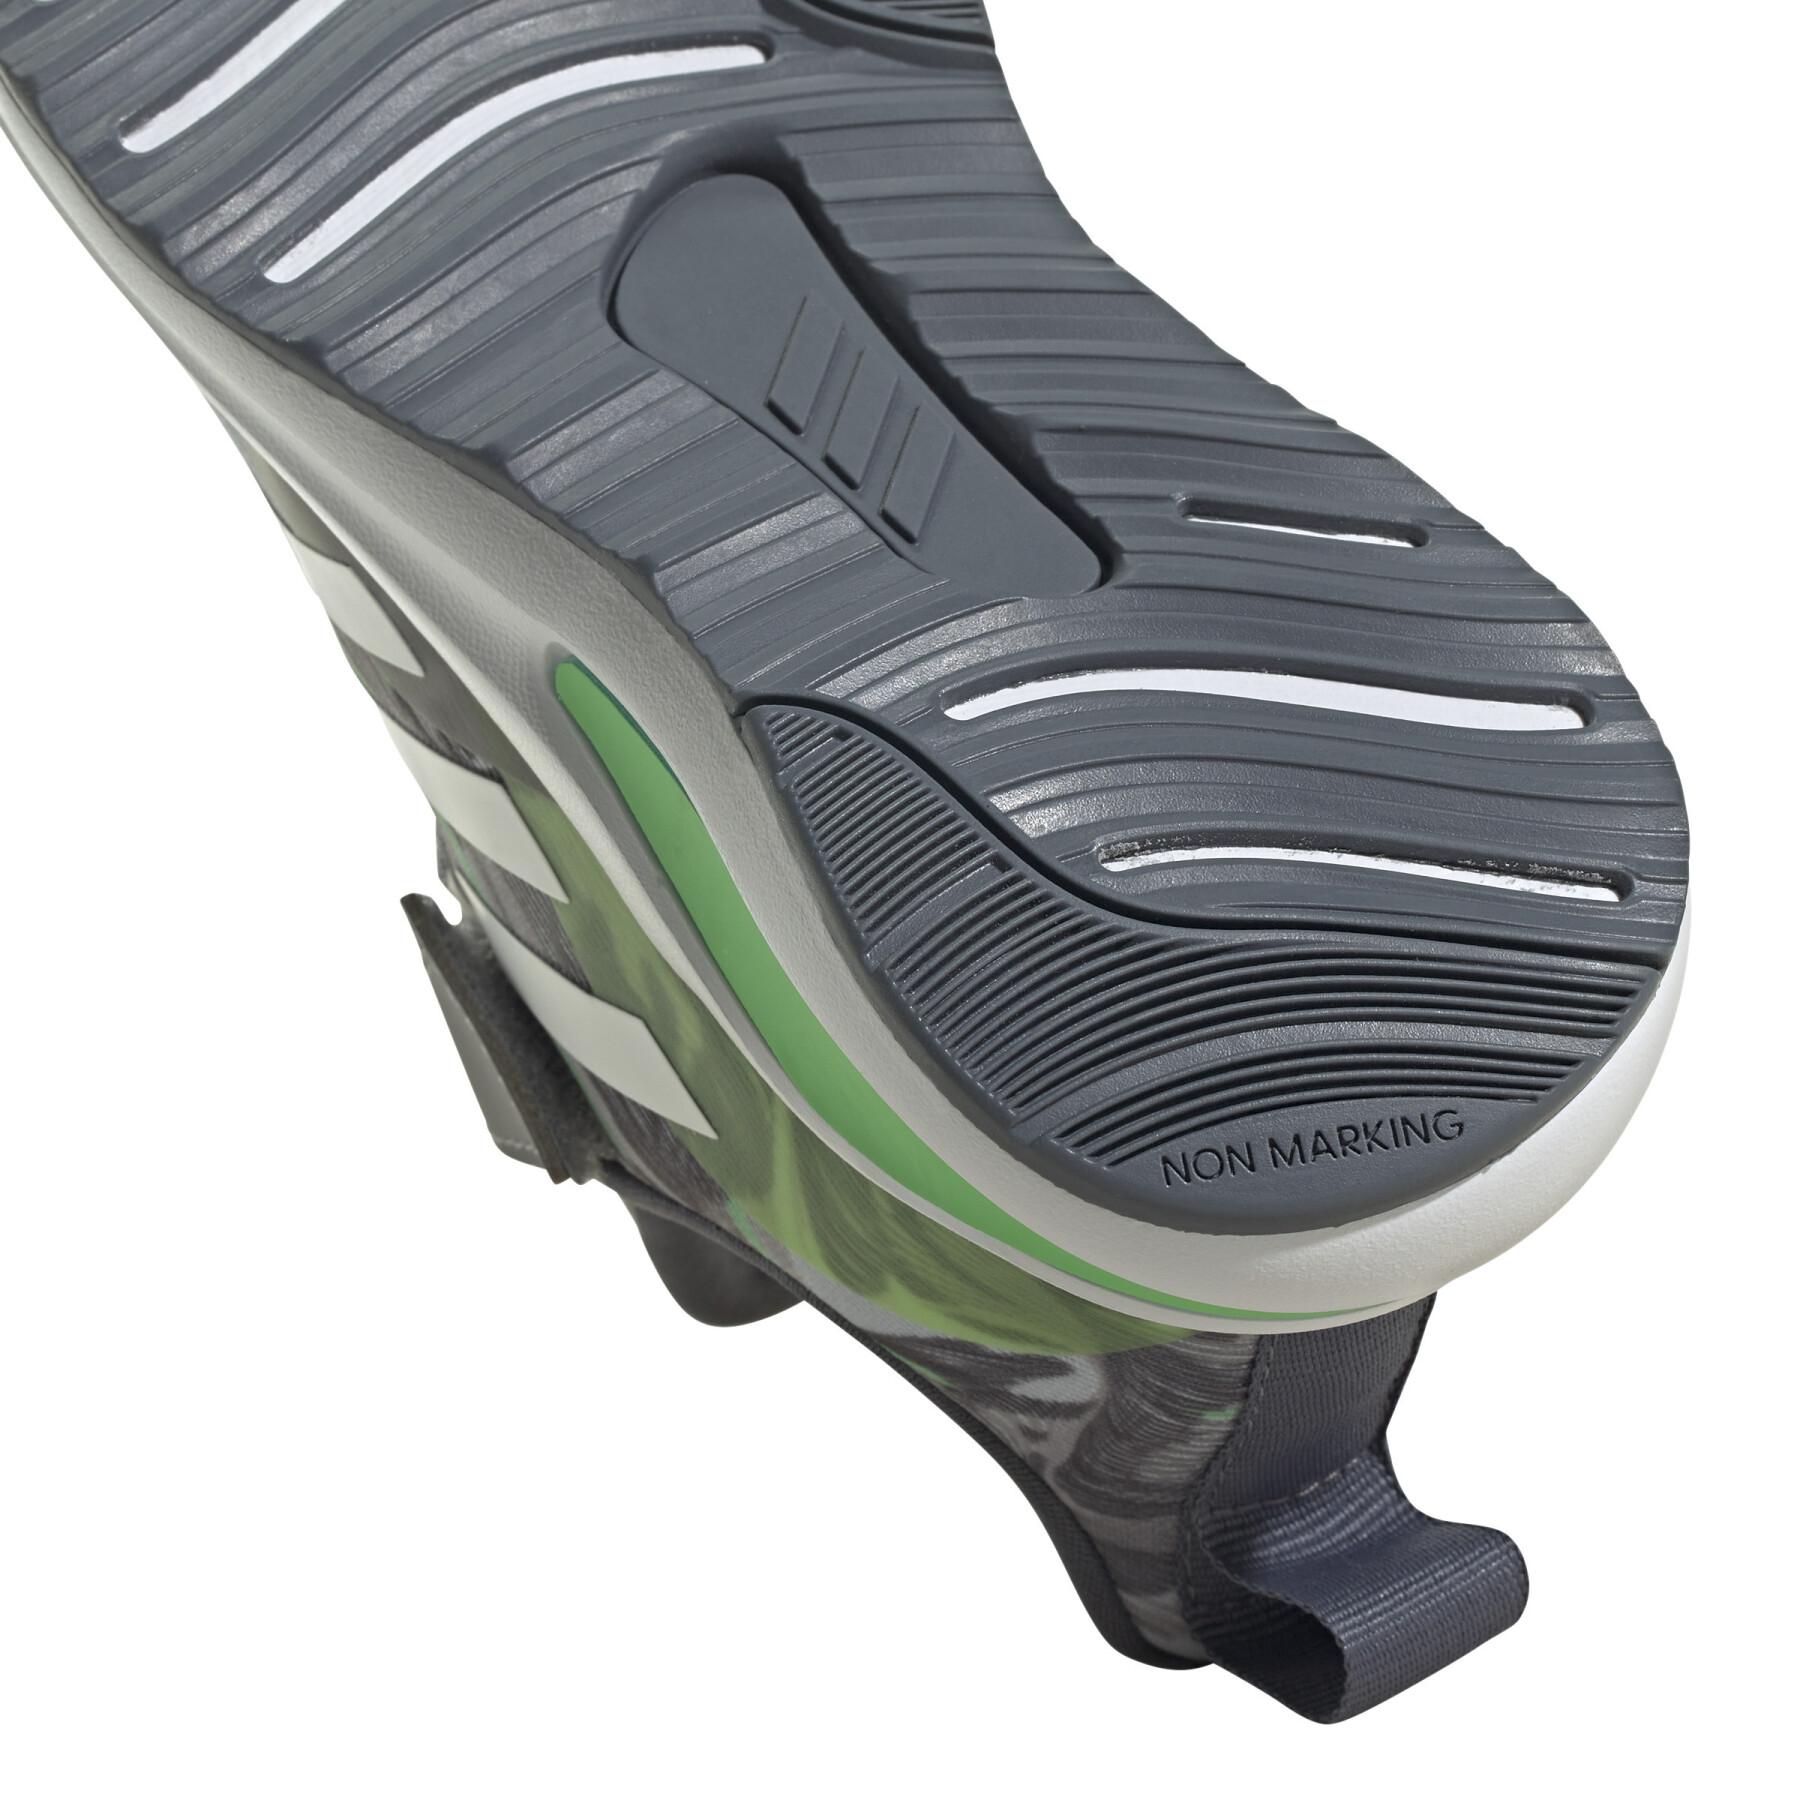 Children's running shoes adidas FortaRun ElastiC